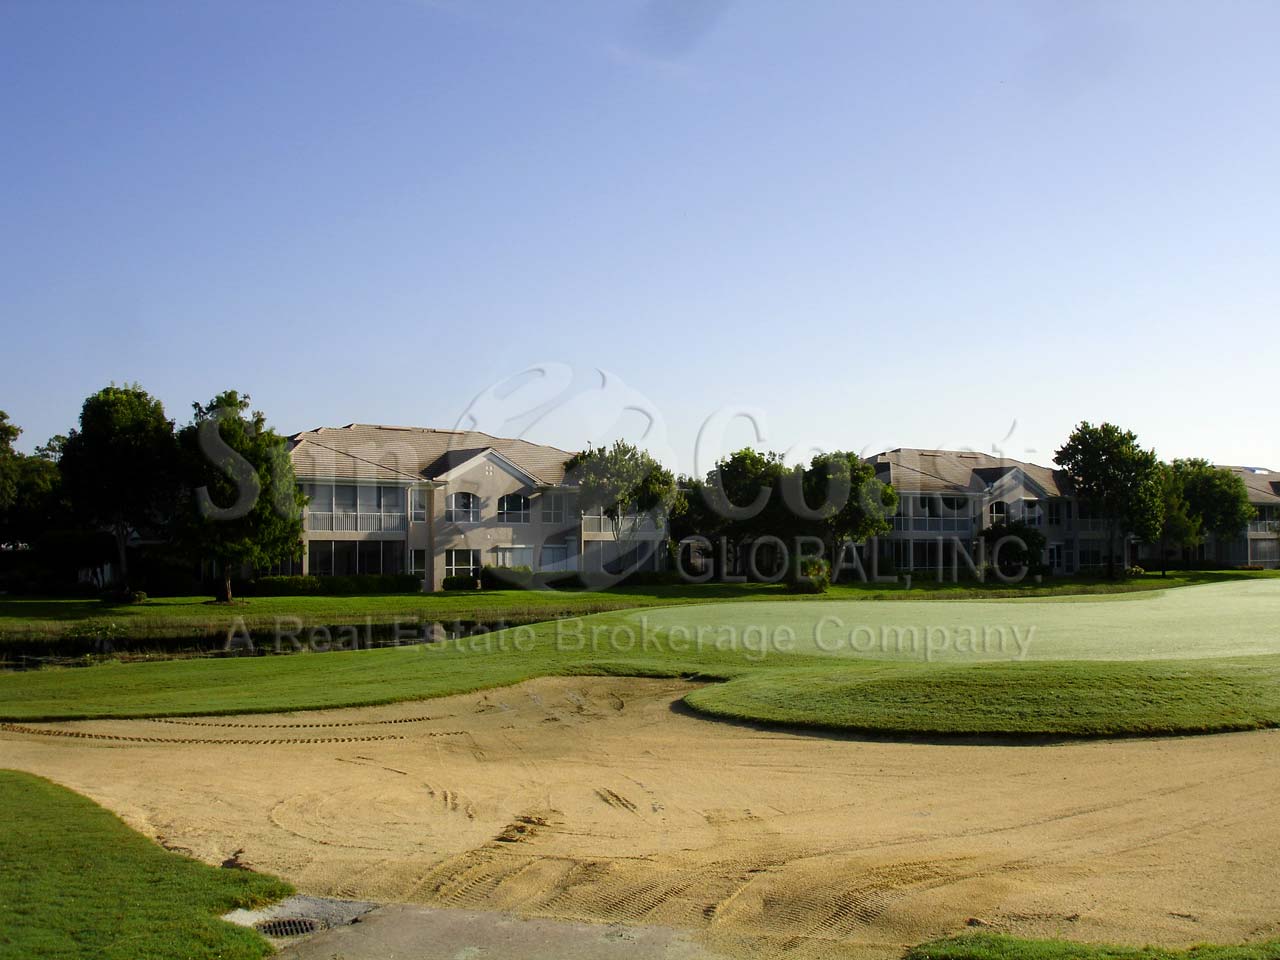 Lancaster Square Golf Course